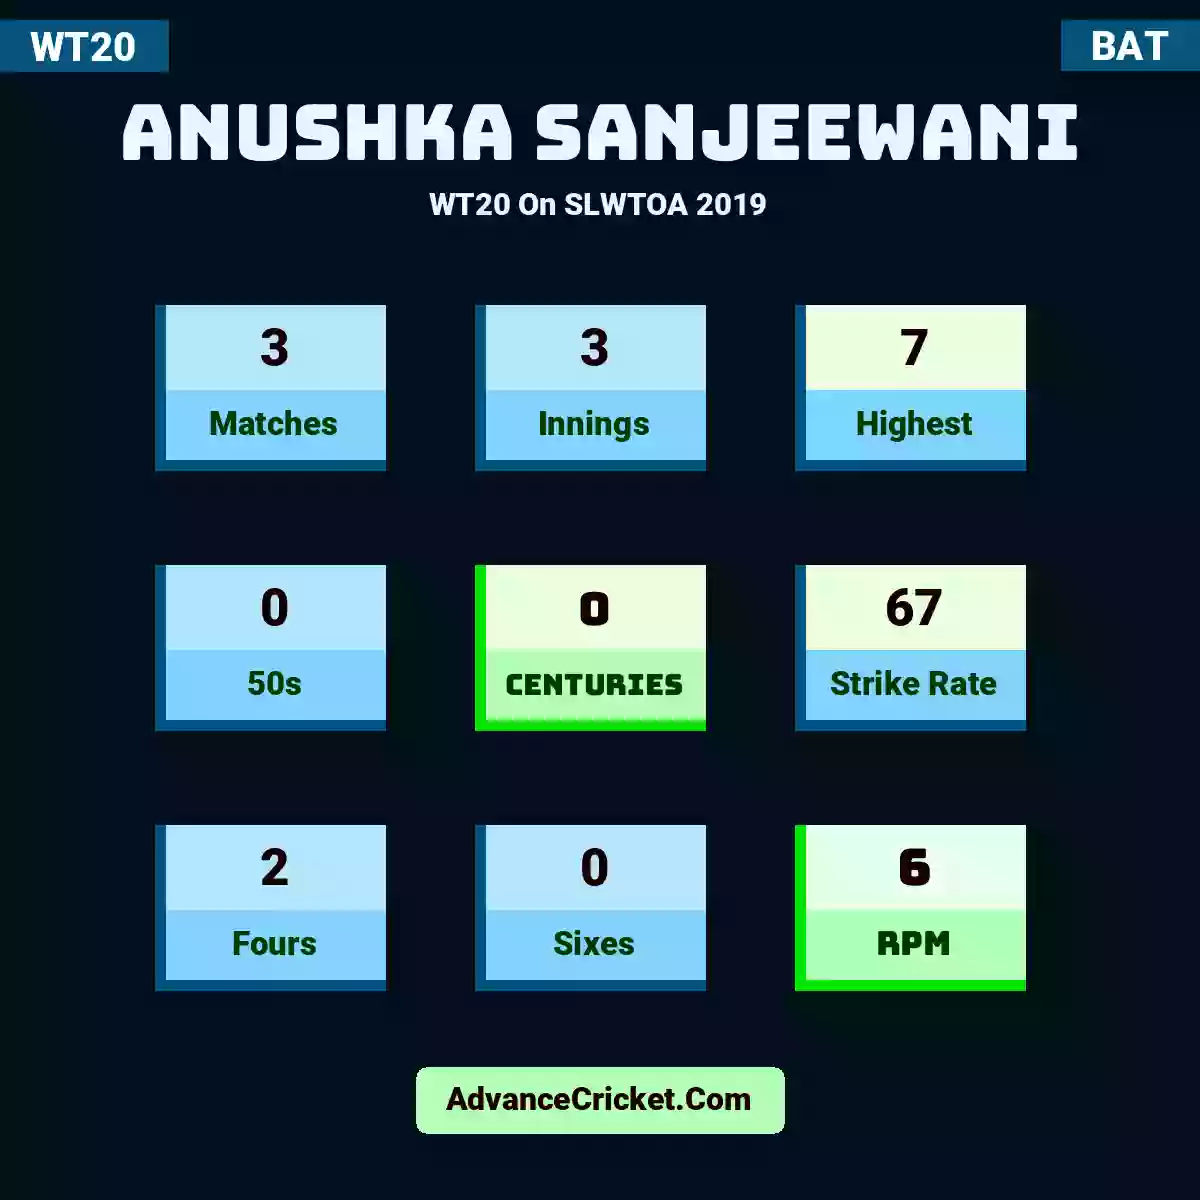 Anushka Sanjeewani WT20  On SLWTOA 2019, Anushka Sanjeewani played 3 matches, scored 7 runs as highest, 0 half-centuries, and 0 centuries, with a strike rate of 67. A.Sanjeewani hit 2 fours and 0 sixes, with an RPM of 6.